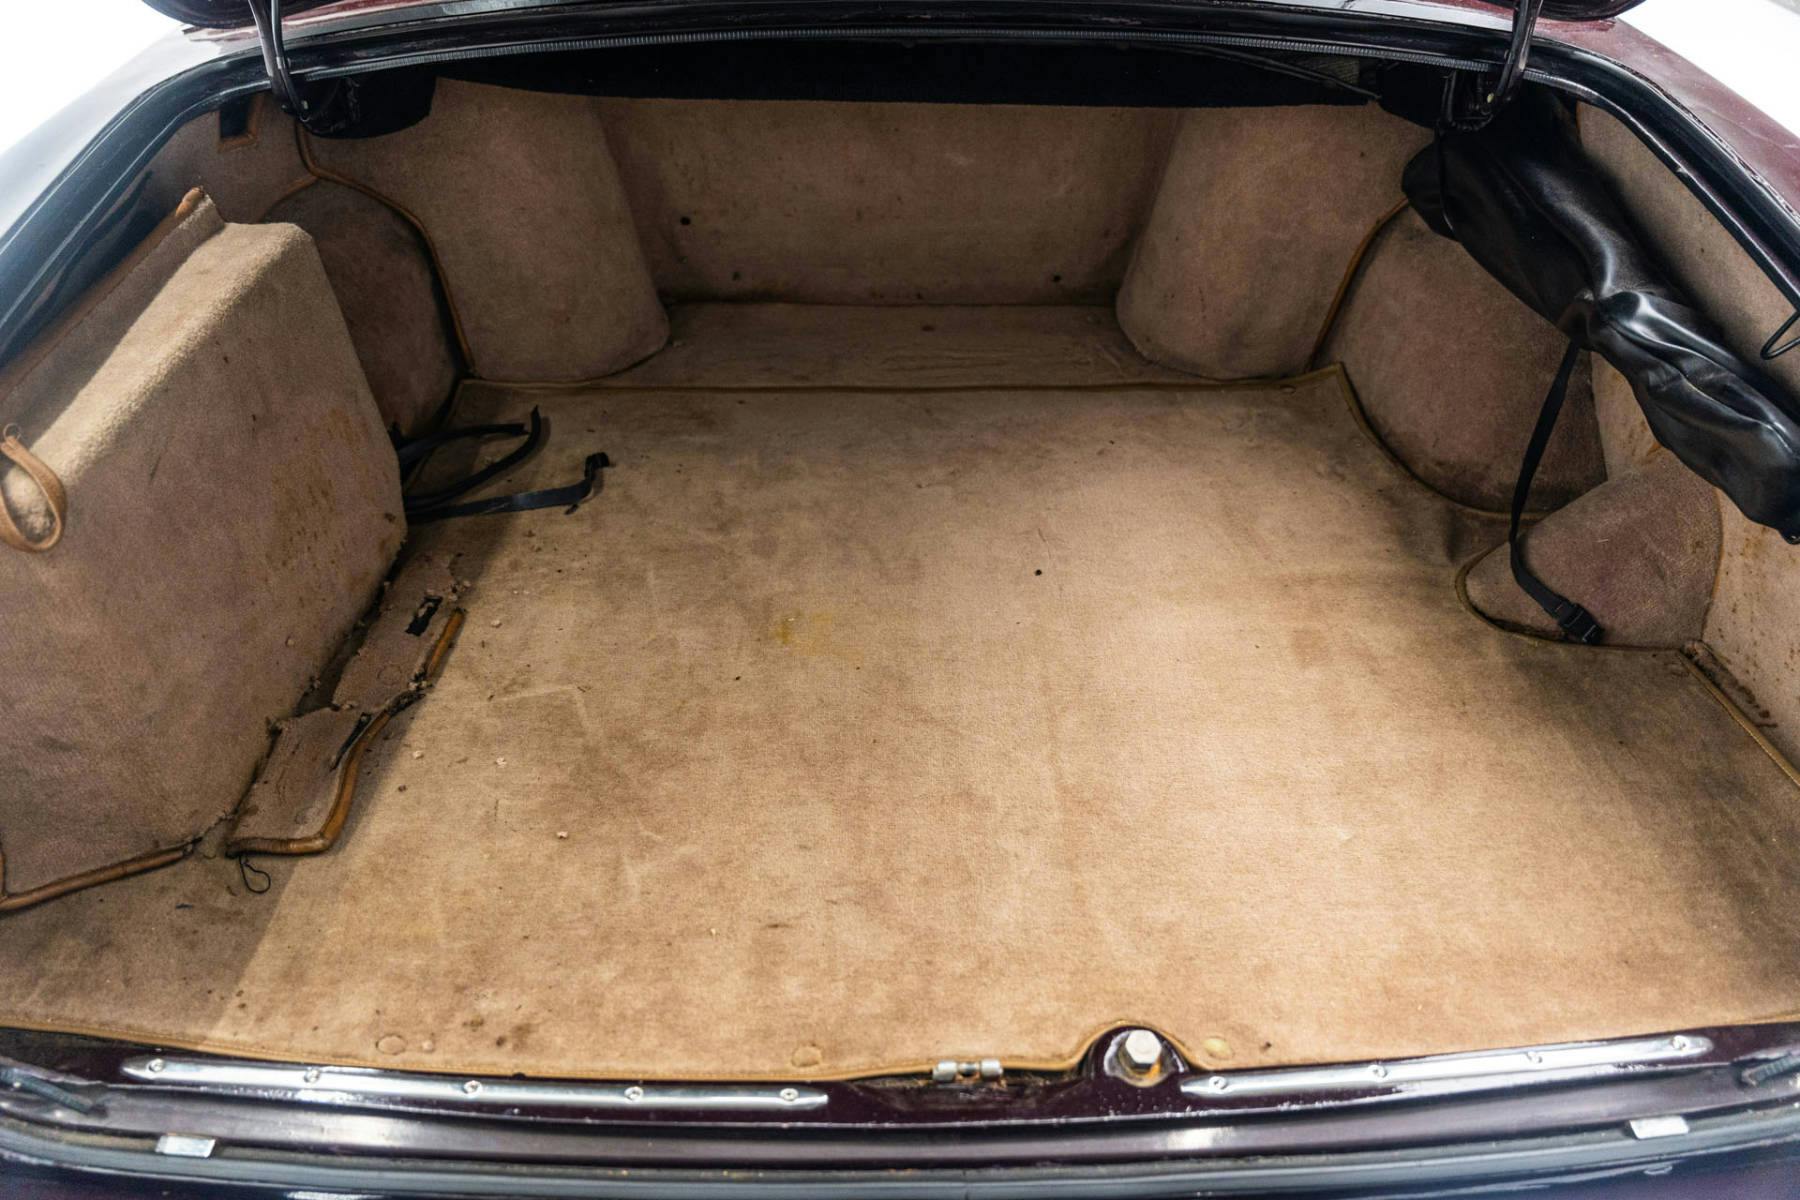 1970 Rolls-Royce Silver Shadow Long Wheelbase Saloon interior trunk detail